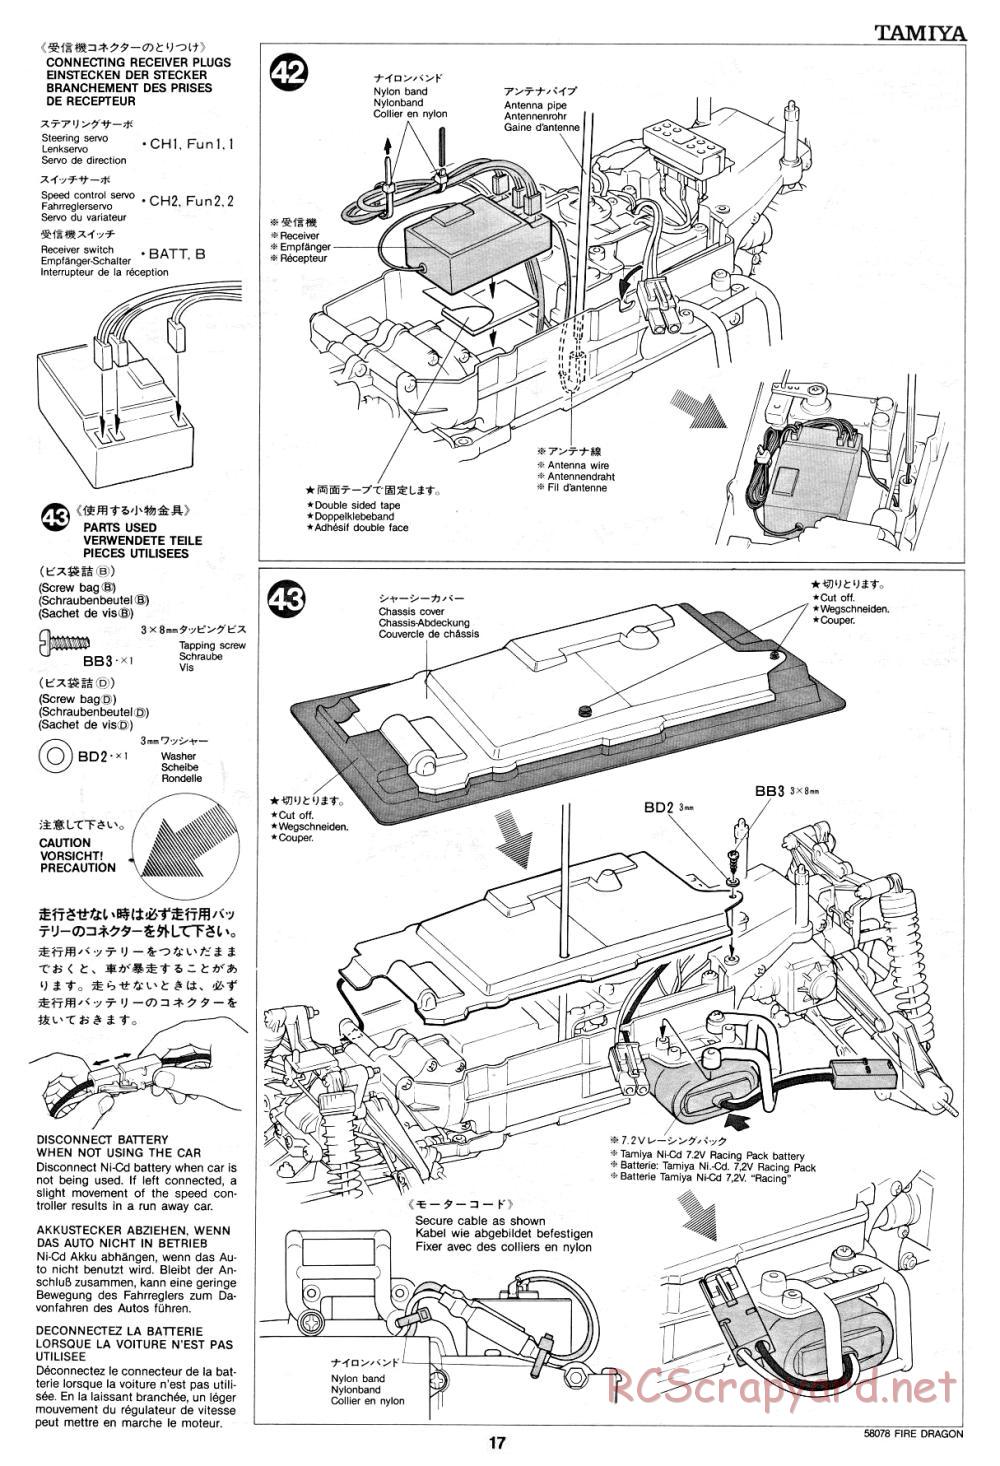 Tamiya - Fire Dragon - 58078 - Manual - Page 17